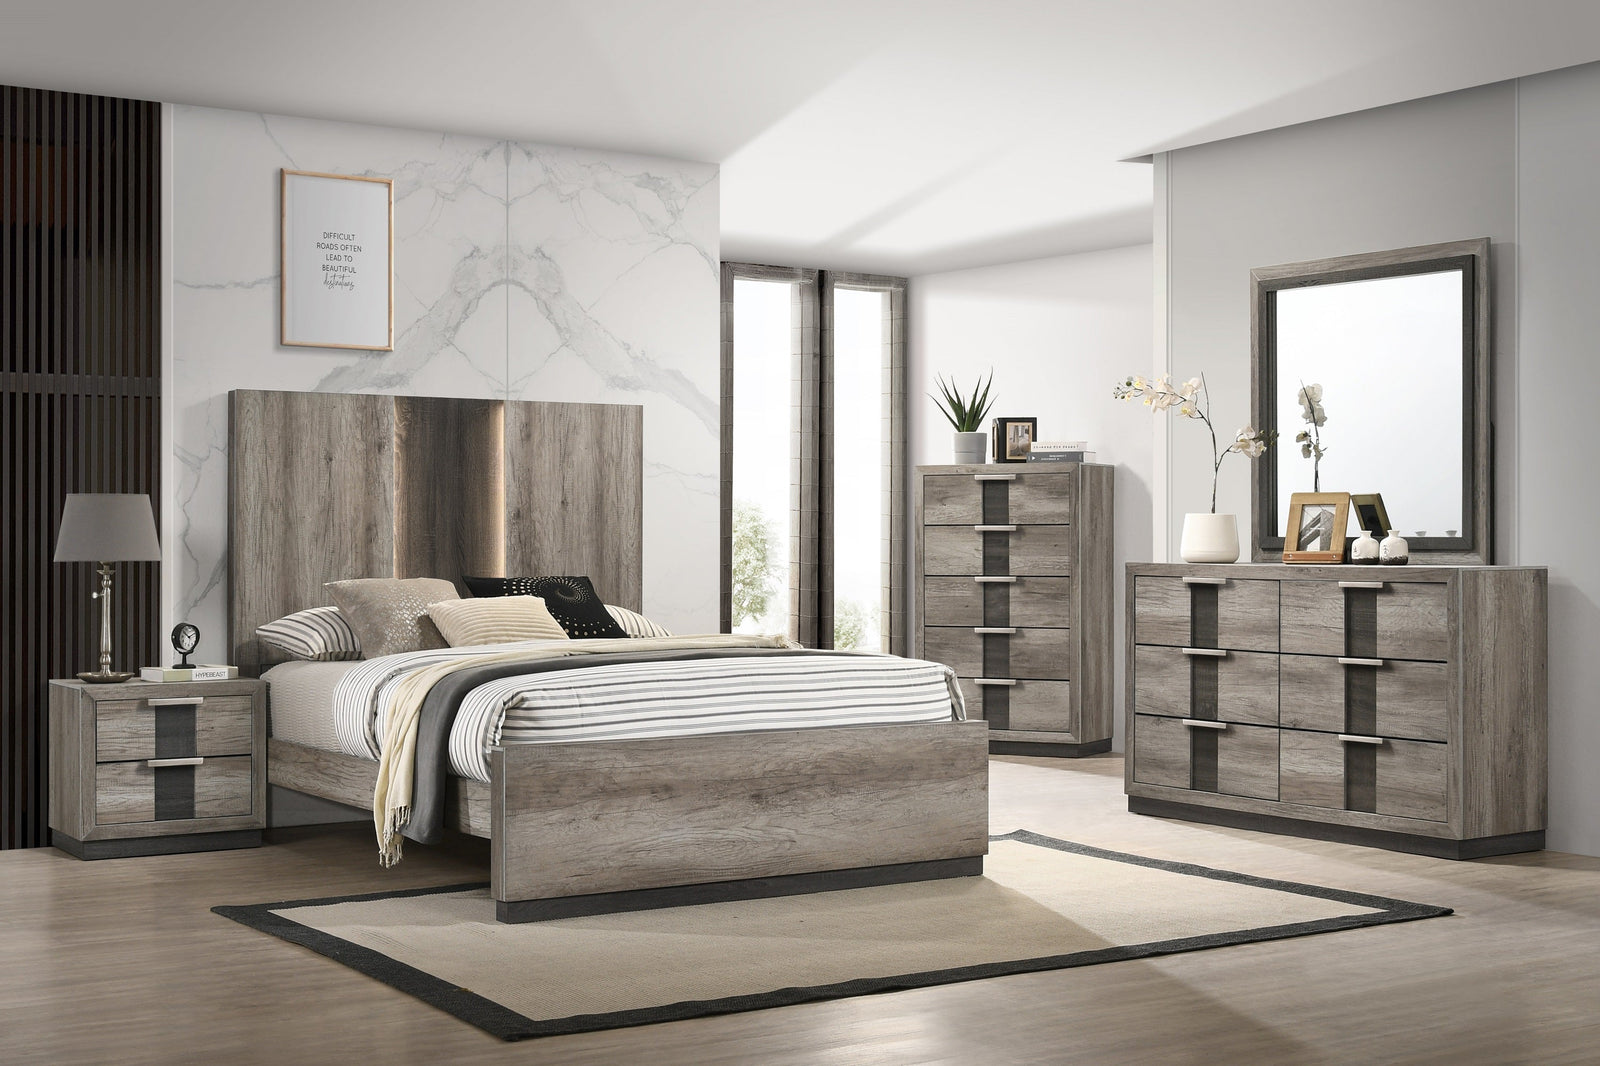 Rangley Light-Brown Contemporary Modern Wood Panel Bedroom Set